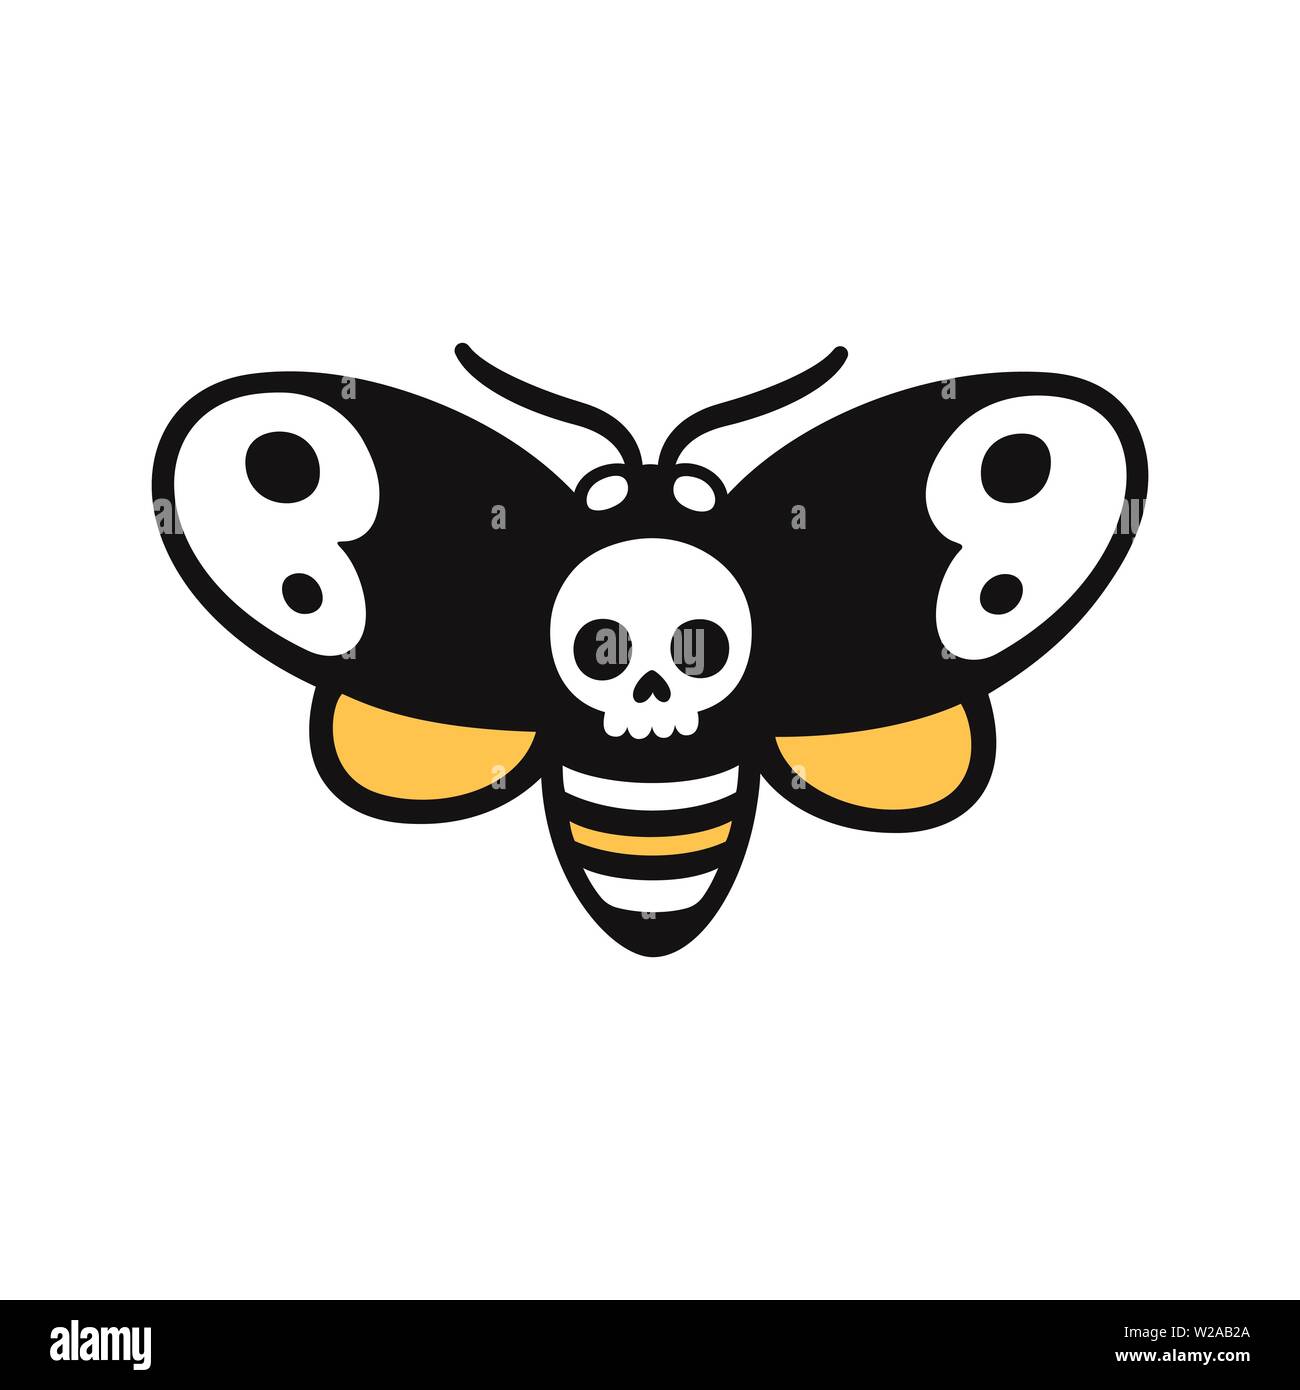 Cartoon Drawing Of Death S Head Hawkmoth Moth With Skull Shape